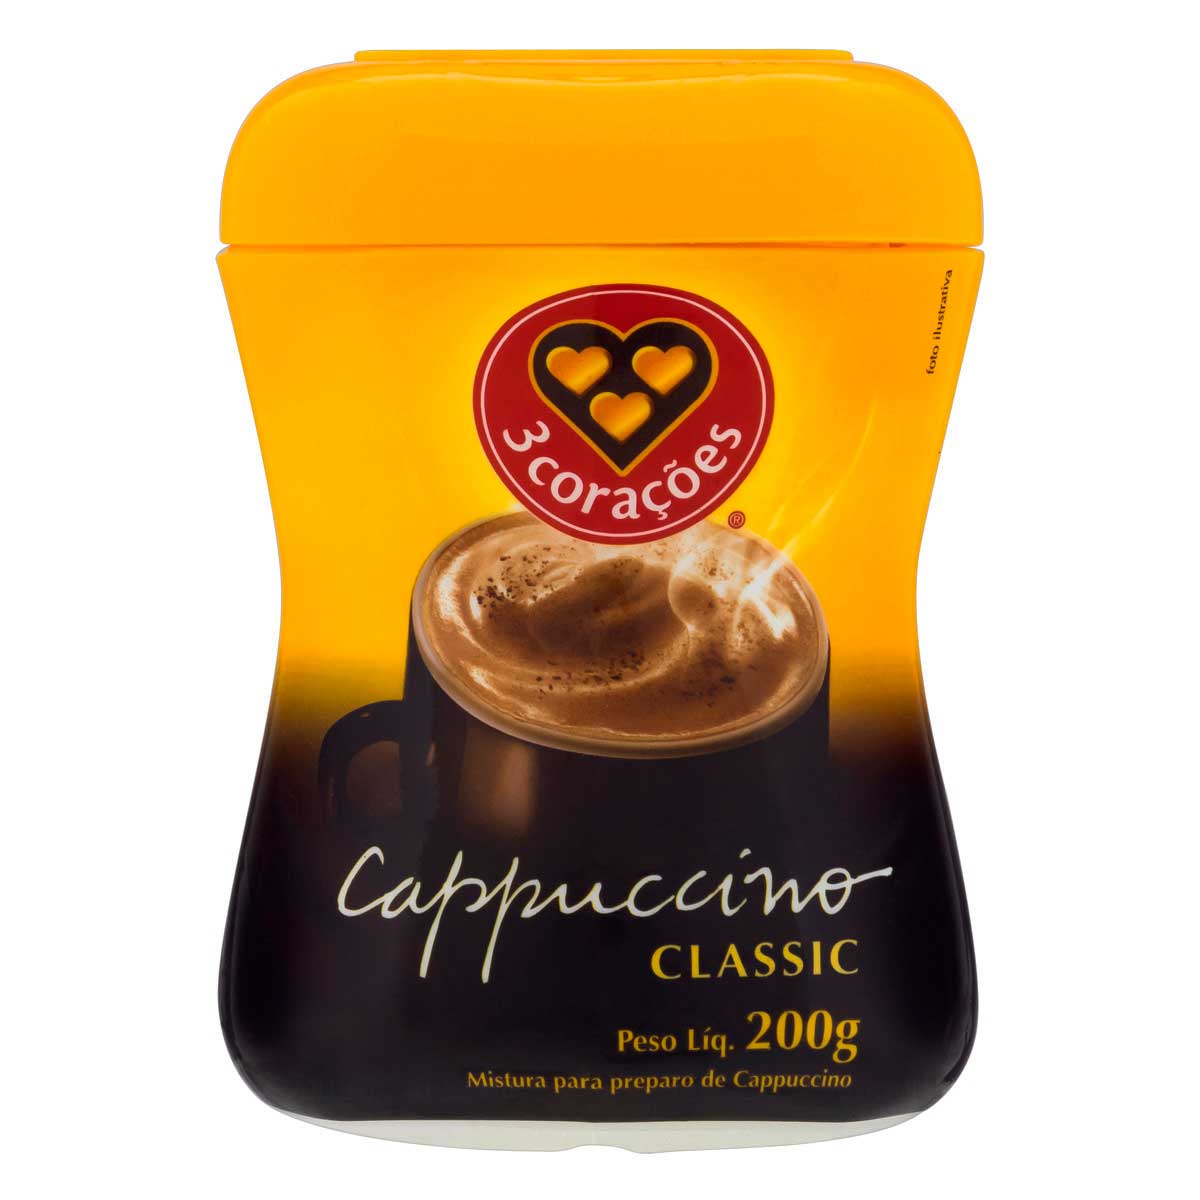 cappuccino-classic-3-coracoes-pote-200g-1.jpg